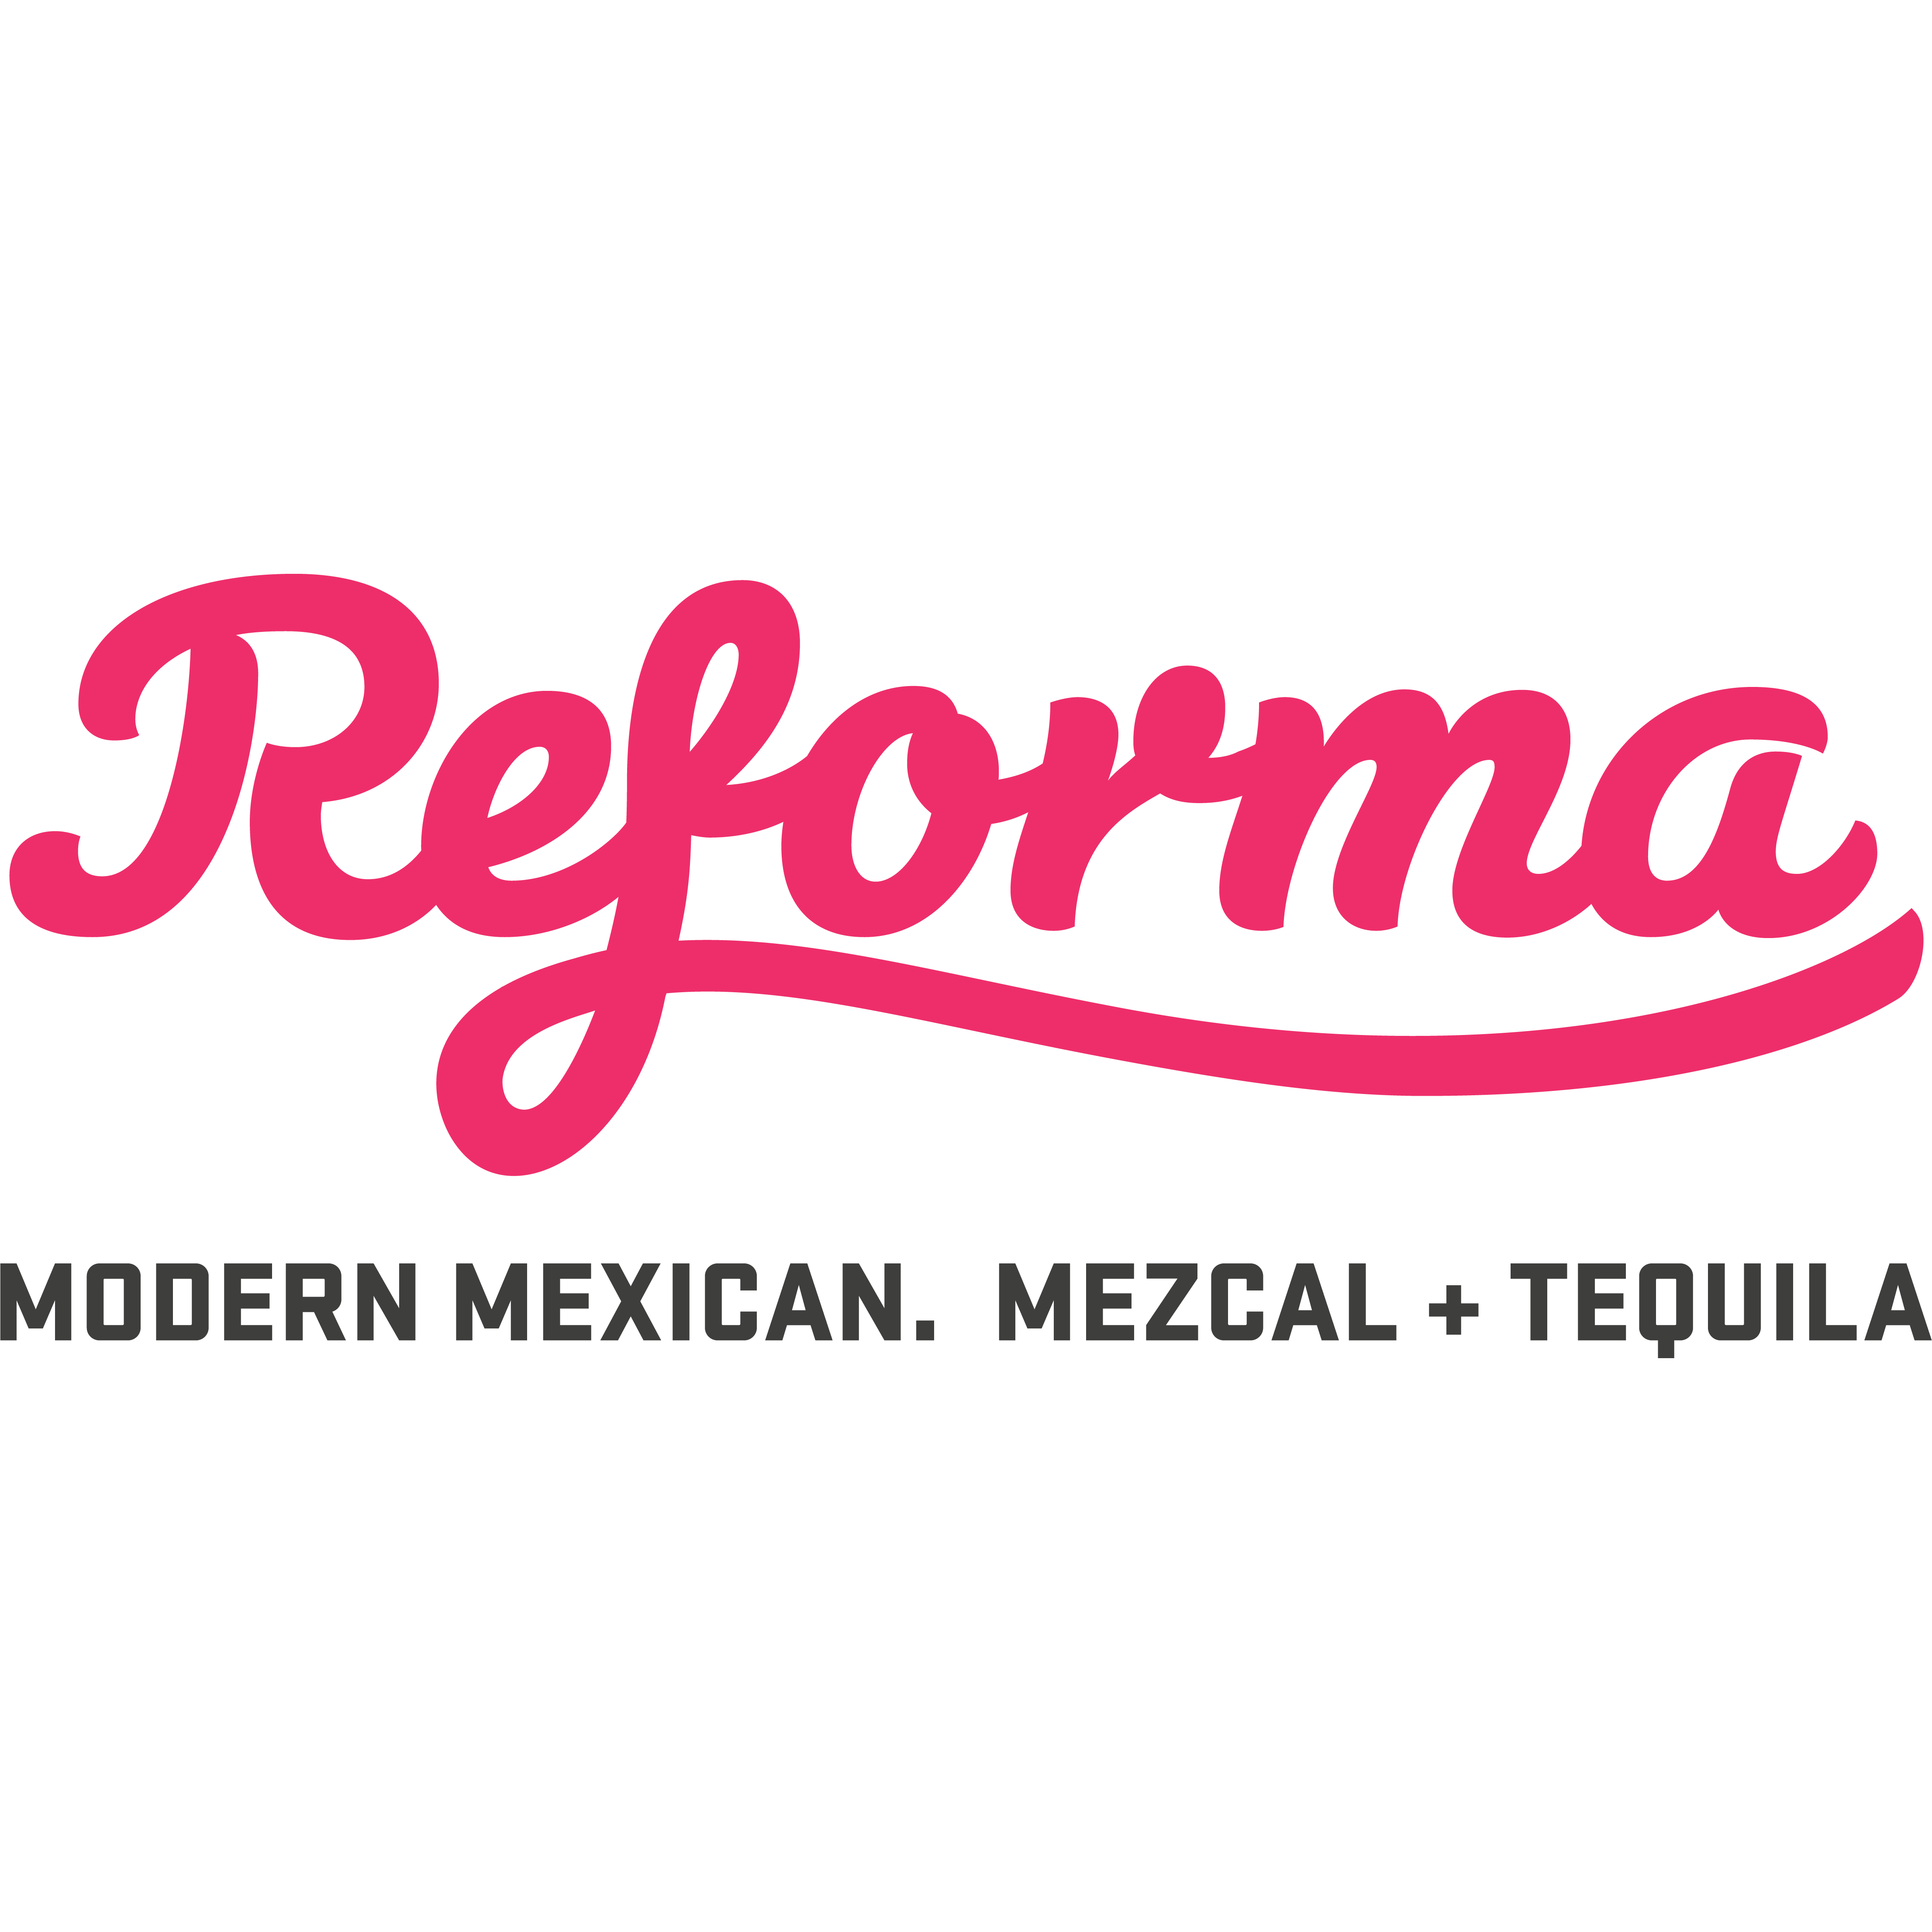 Reforma Modern Mexican Mezcal and Tequila - Tucson, AZ 85718 - (520)867-4134 | ShowMeLocal.com